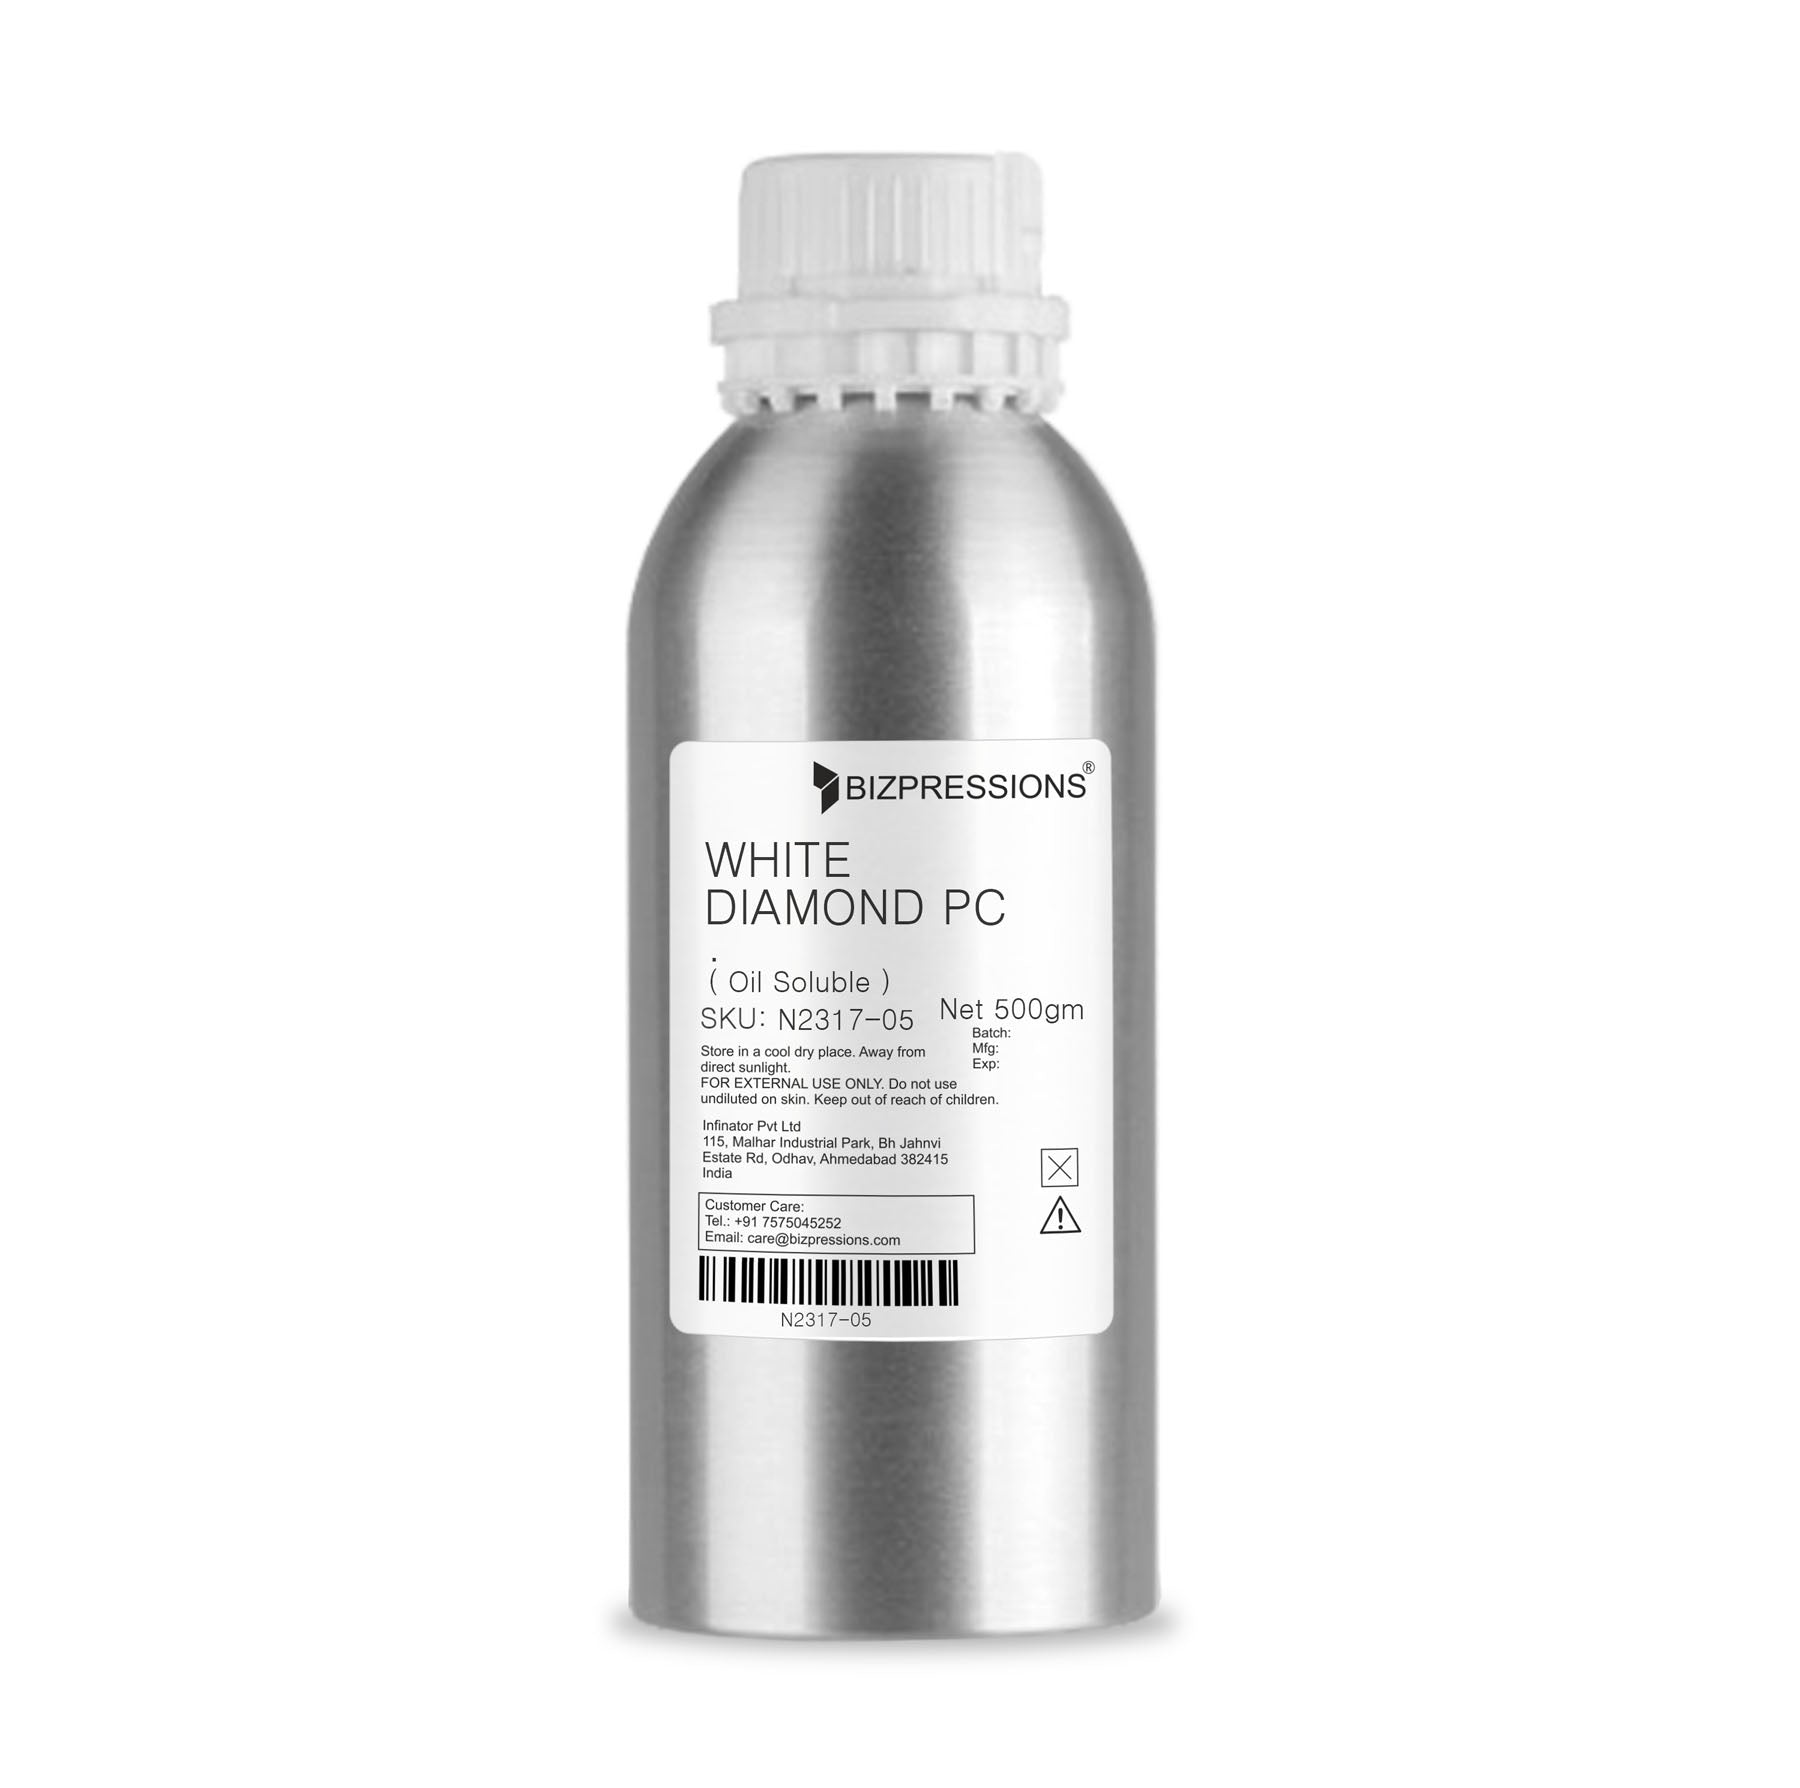 WHITE DIAMOND PC - Fragrance ( Oil Soluble ) - 500 gm